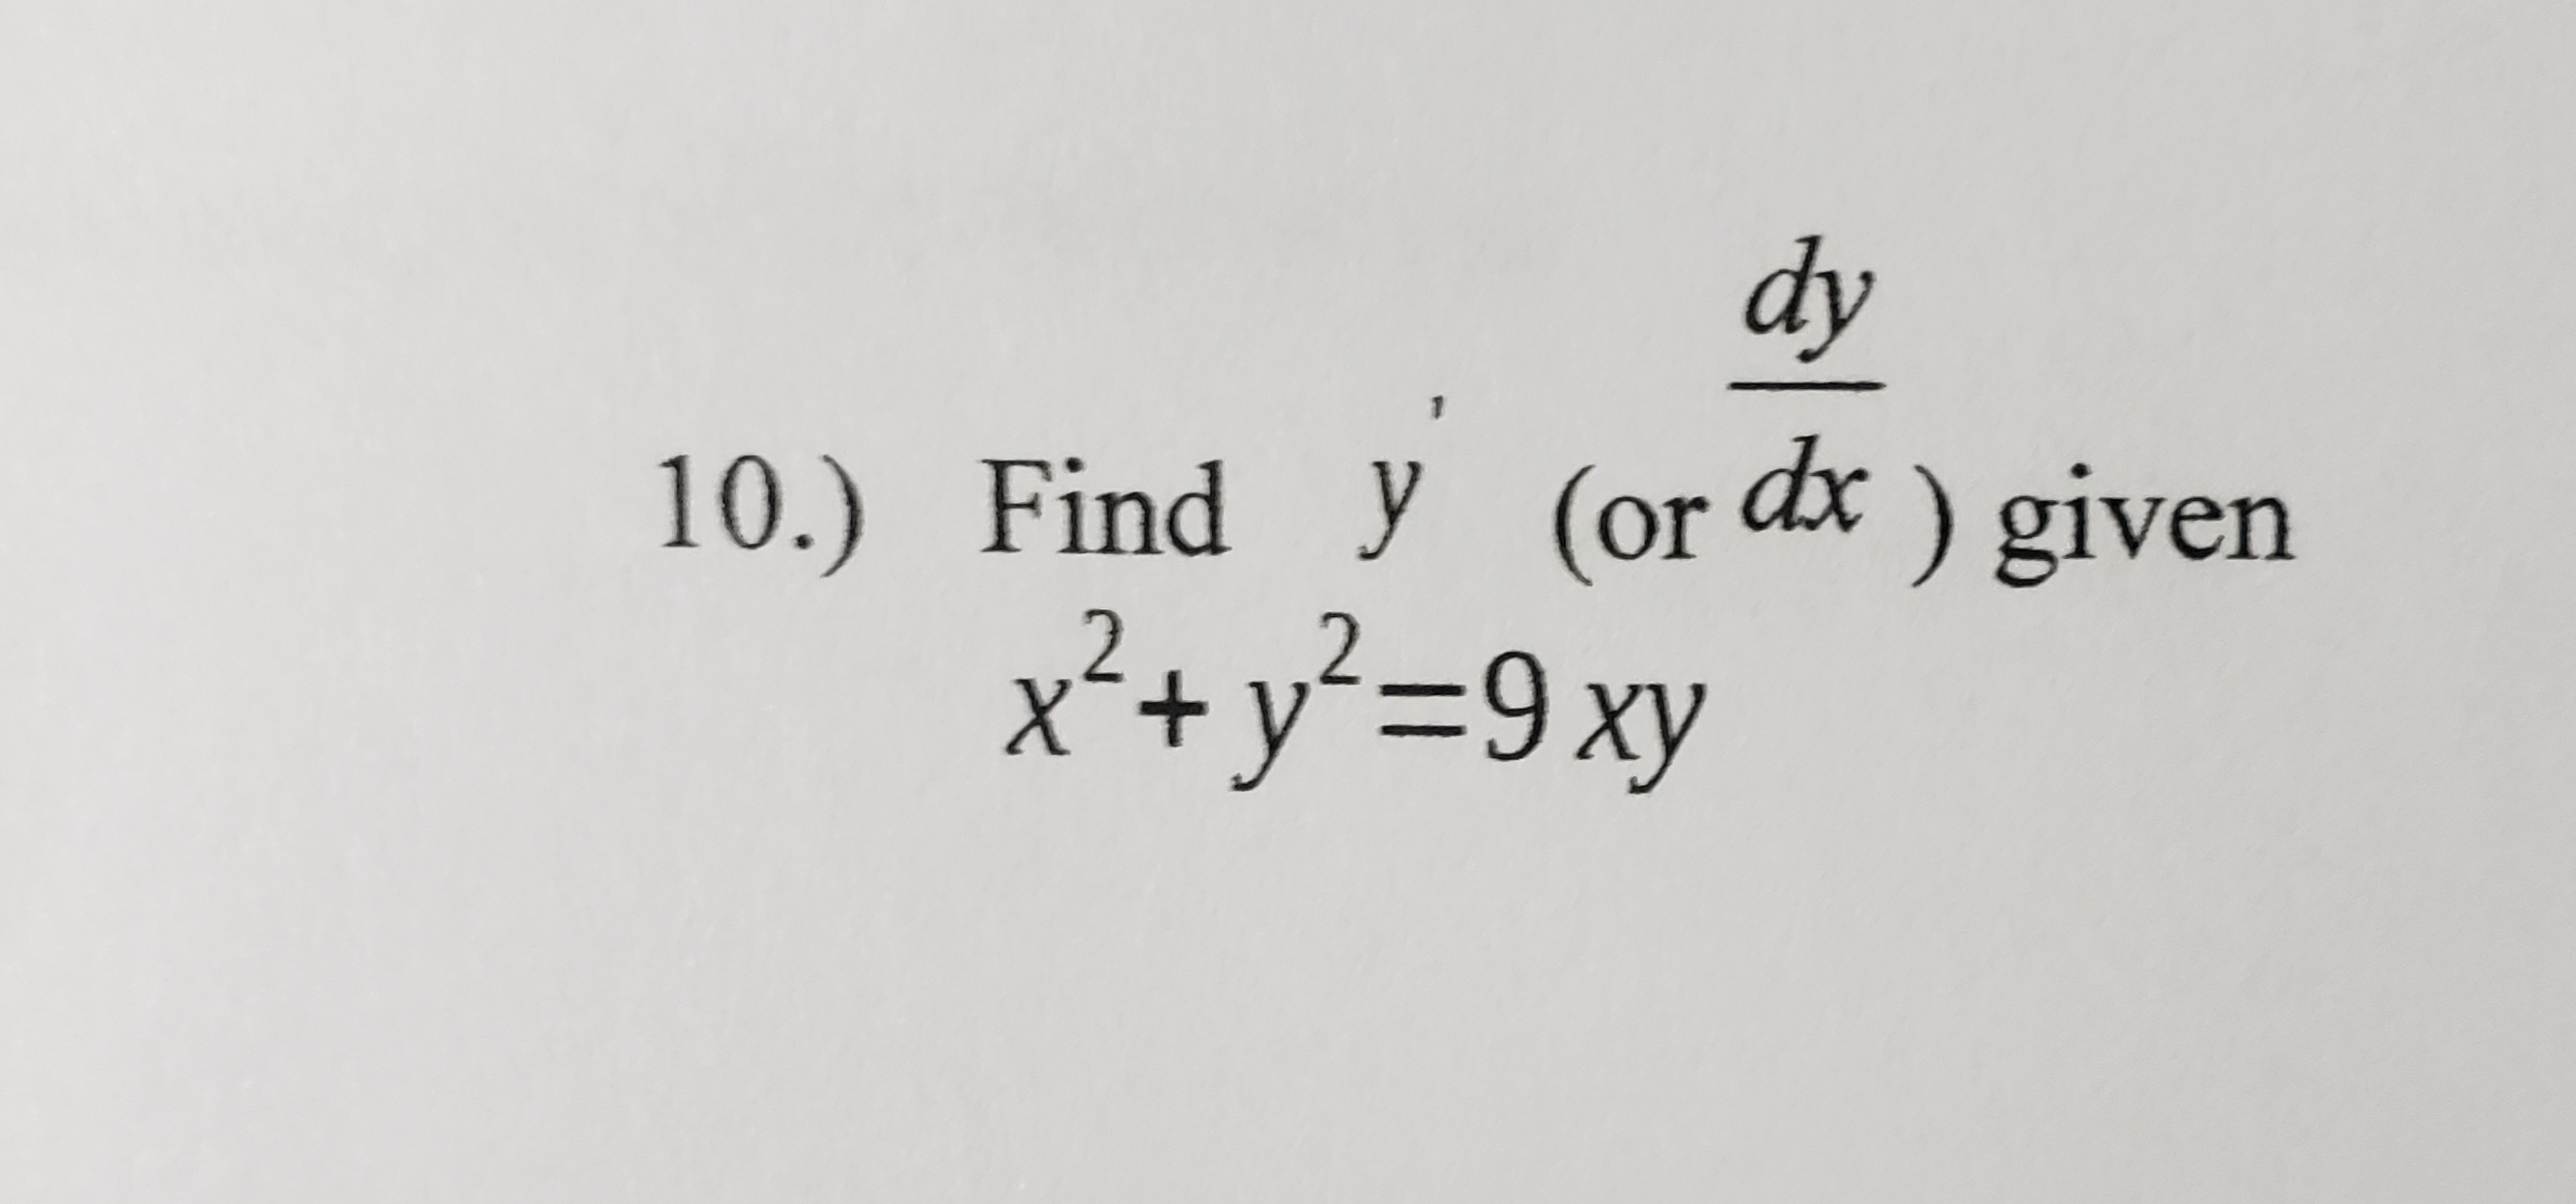 dy
10.) Find y (or dx ) given
x²+y²=9xy
2
